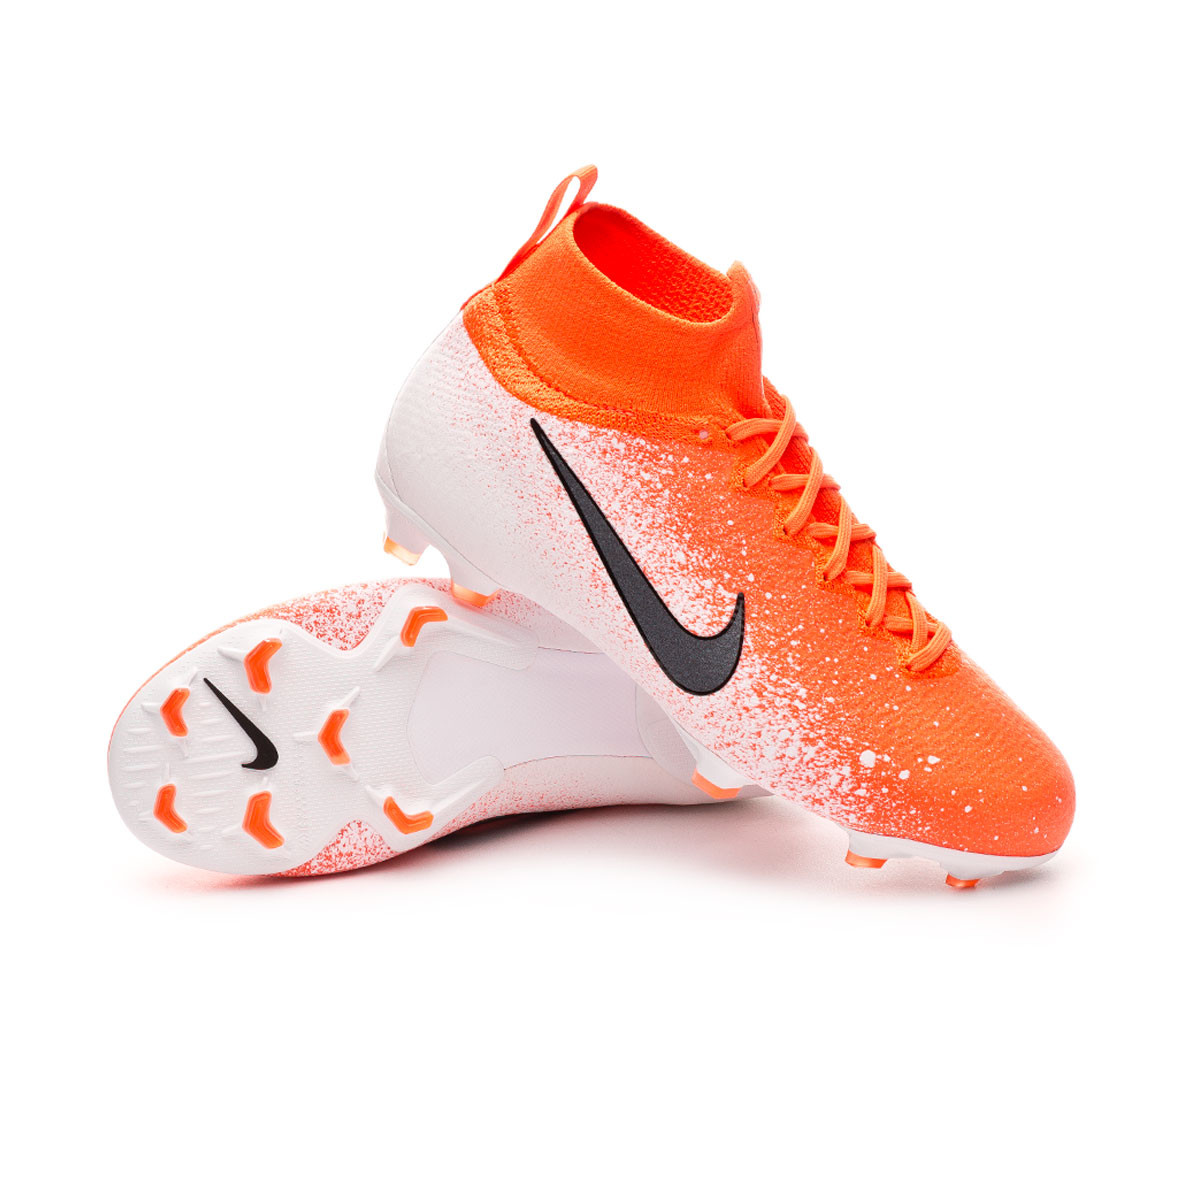 Chaussure de foot Nike Mercurial Superfly VI Elite FG enfant Hyper ...